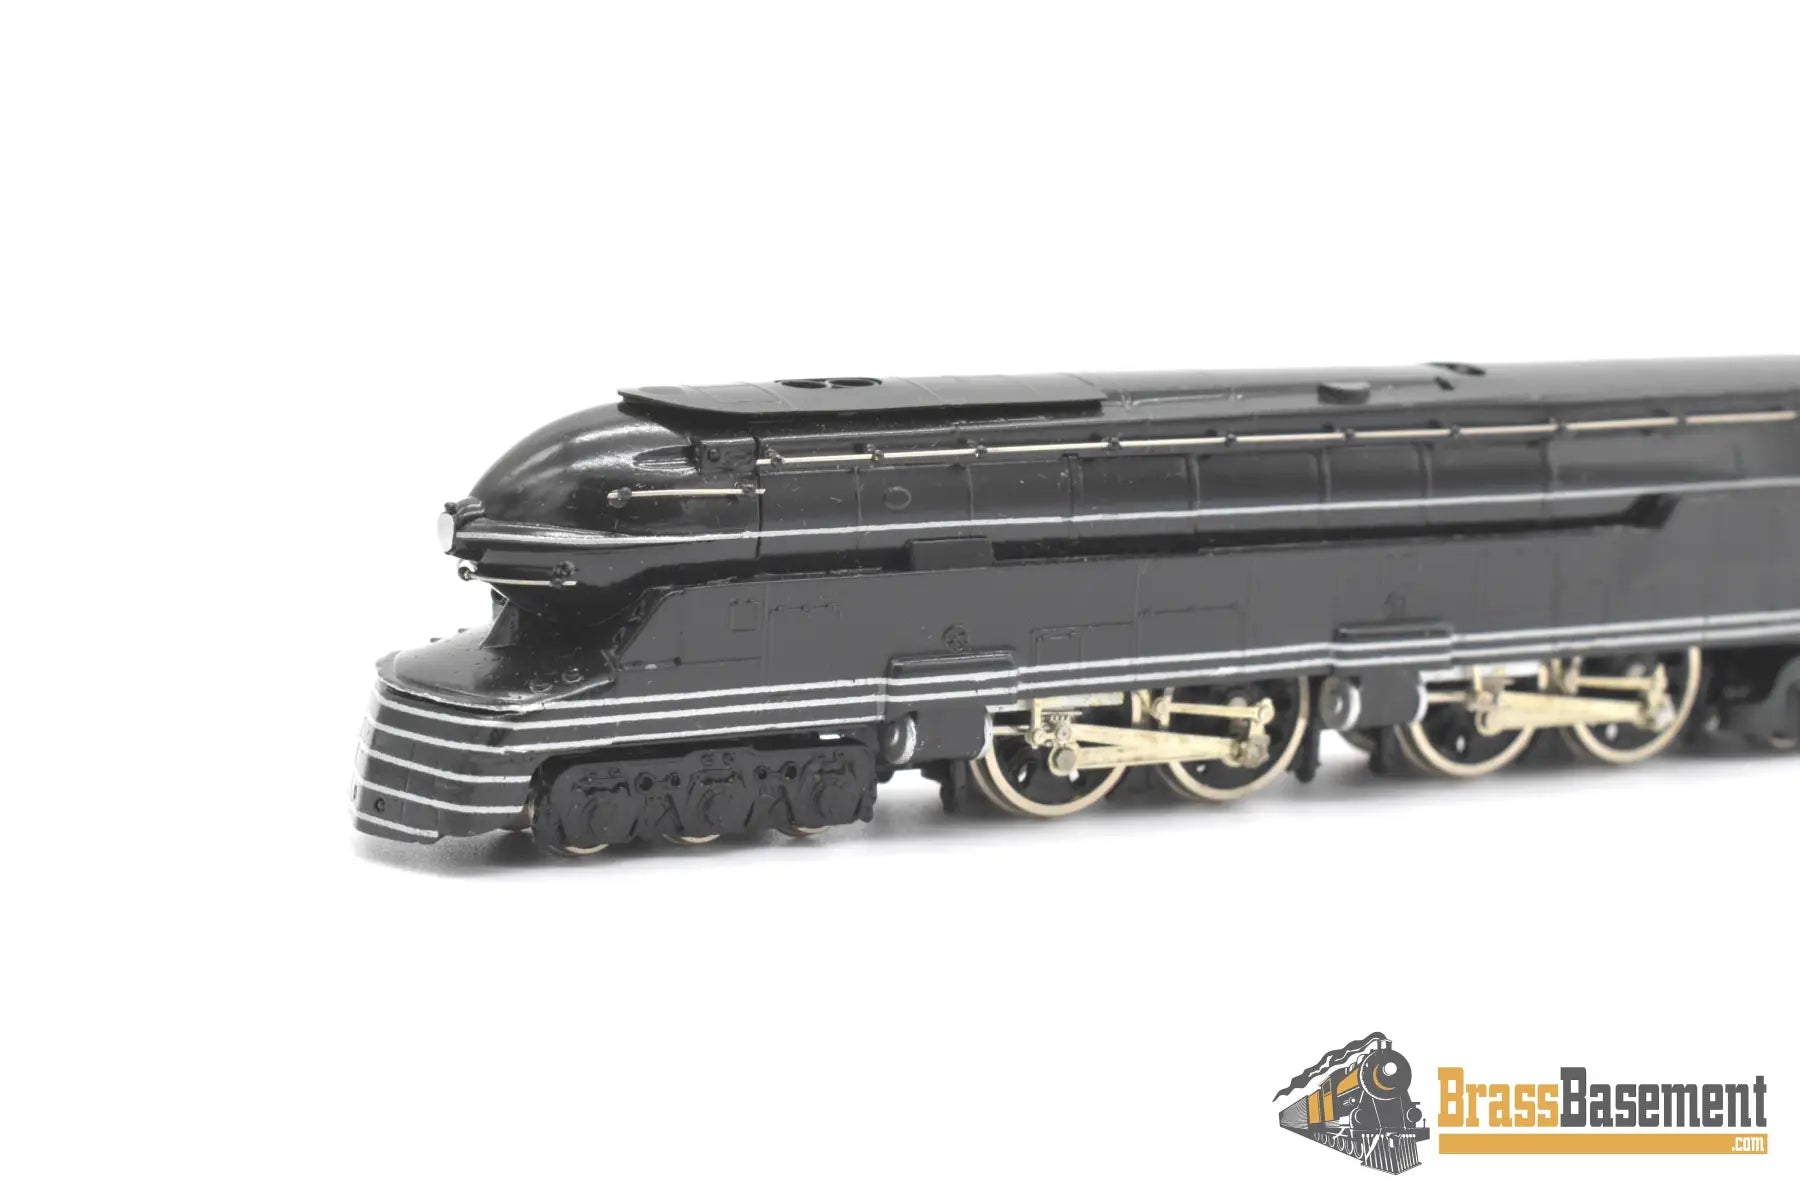 N Brass - Pennsylvania Rr S - 1 6 - 4 - 4 - 6 #6100 Oriental Limited Samhongsa Fp Steam